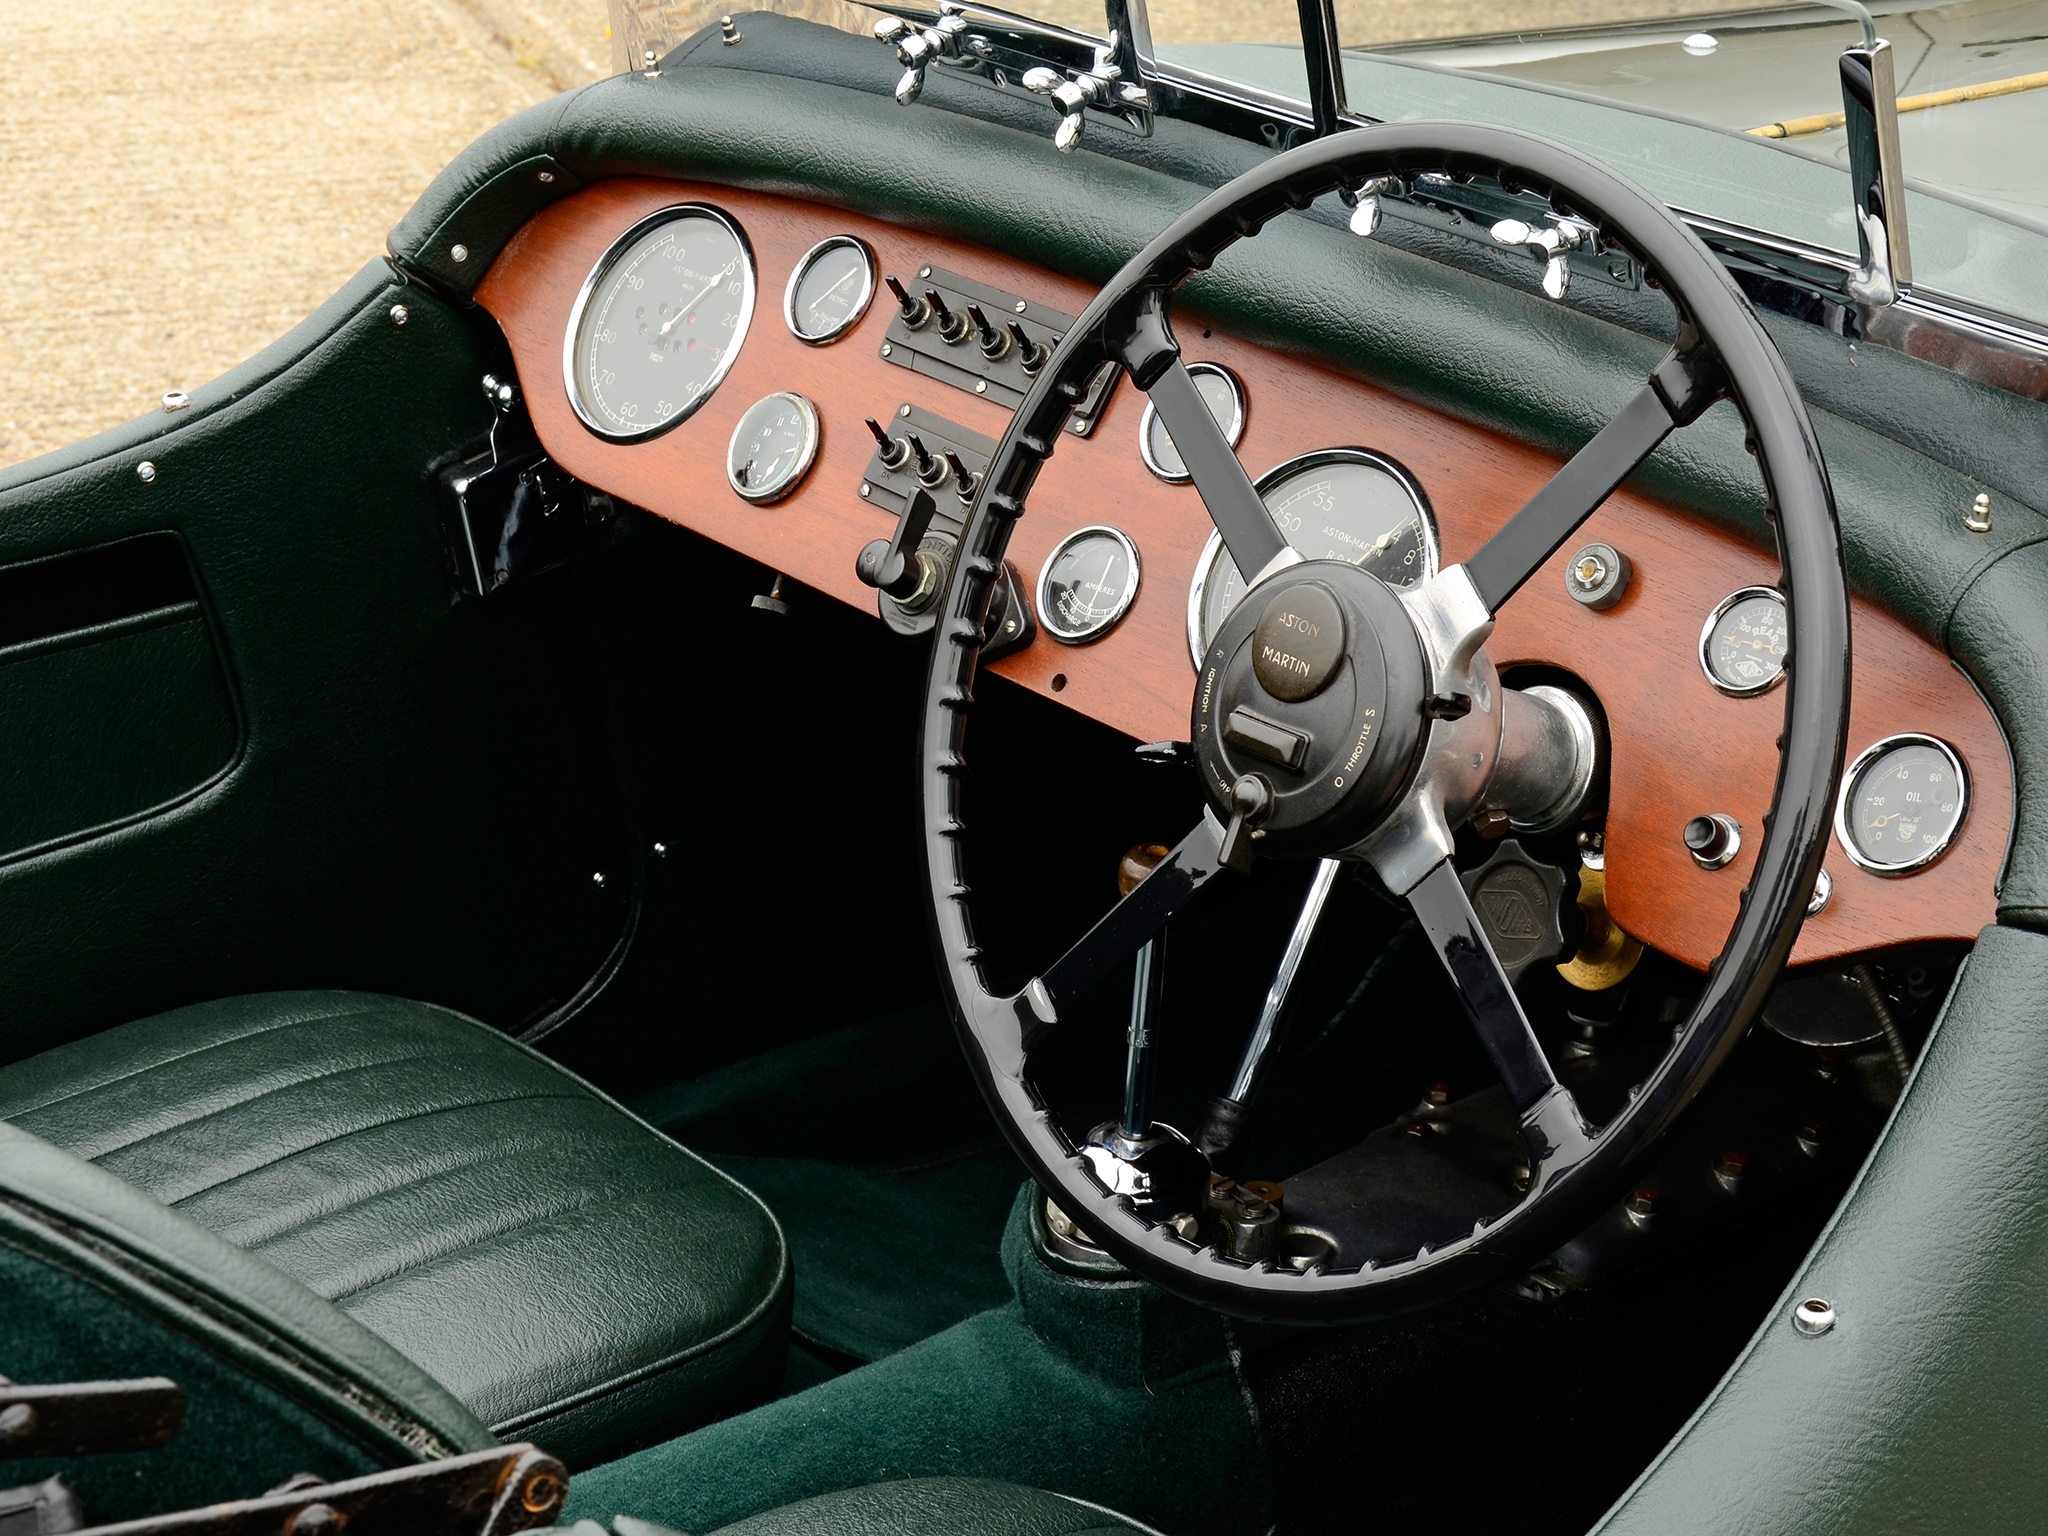 salon, rudder, interior, aston martin, cars, green, retro, steering wheel, 1937